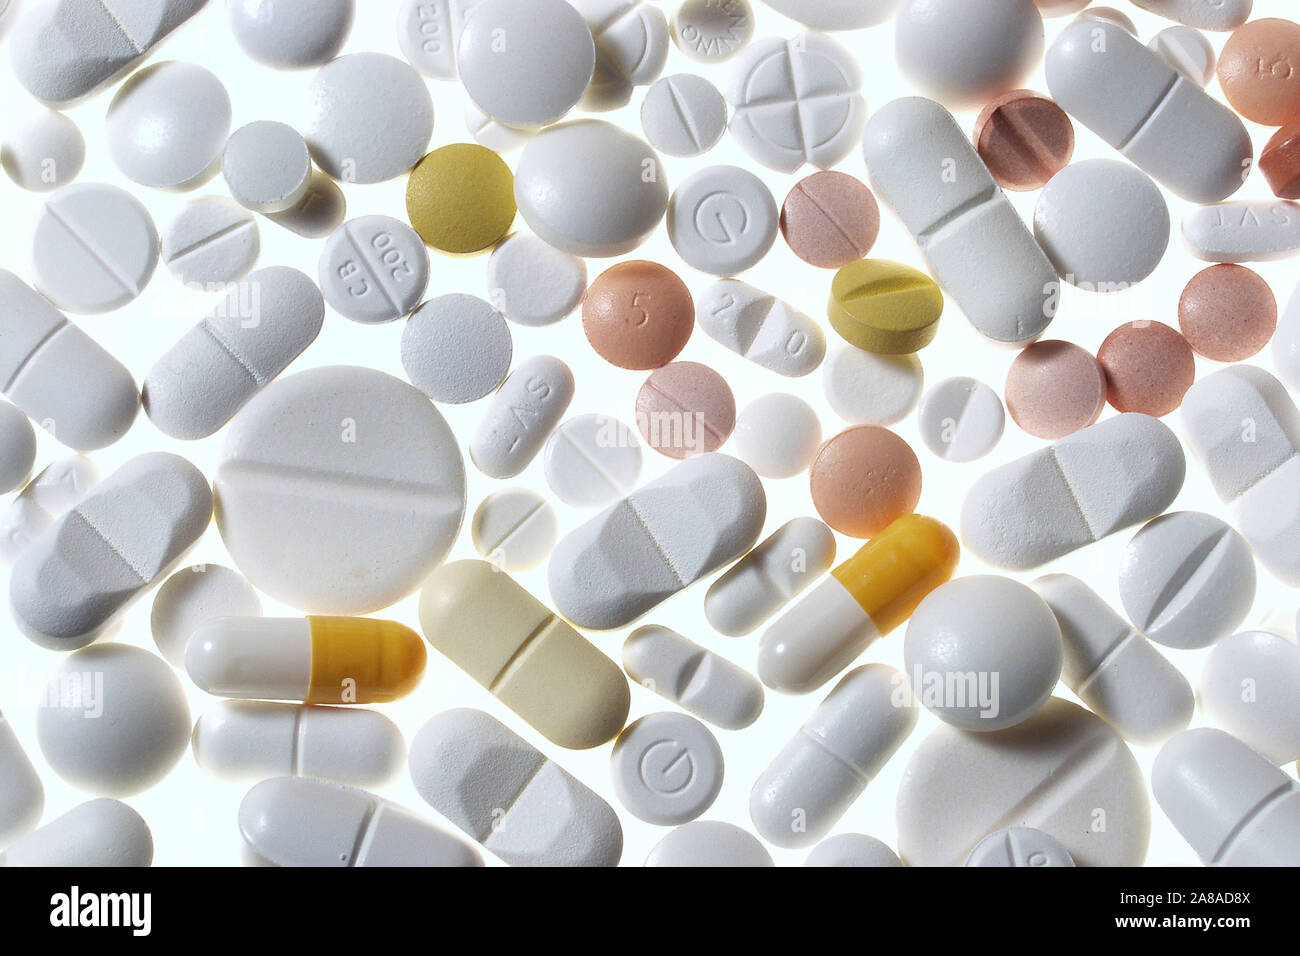 Verschiedene Schmerztabletten Tablettensucht Tabletten,,, Foto de stock